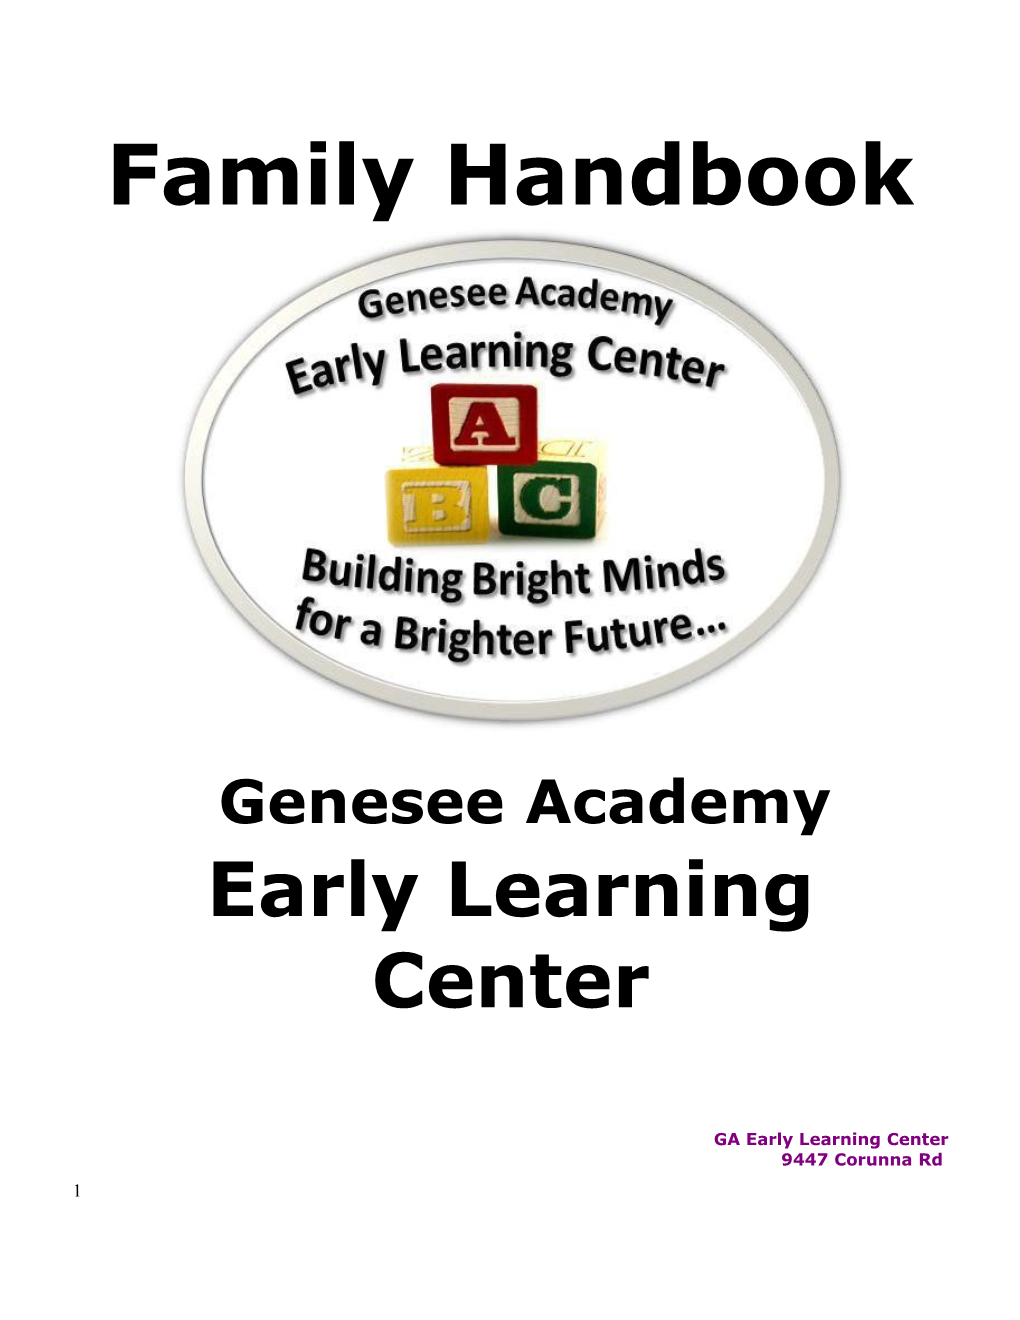 GA-ELC Family Handbook